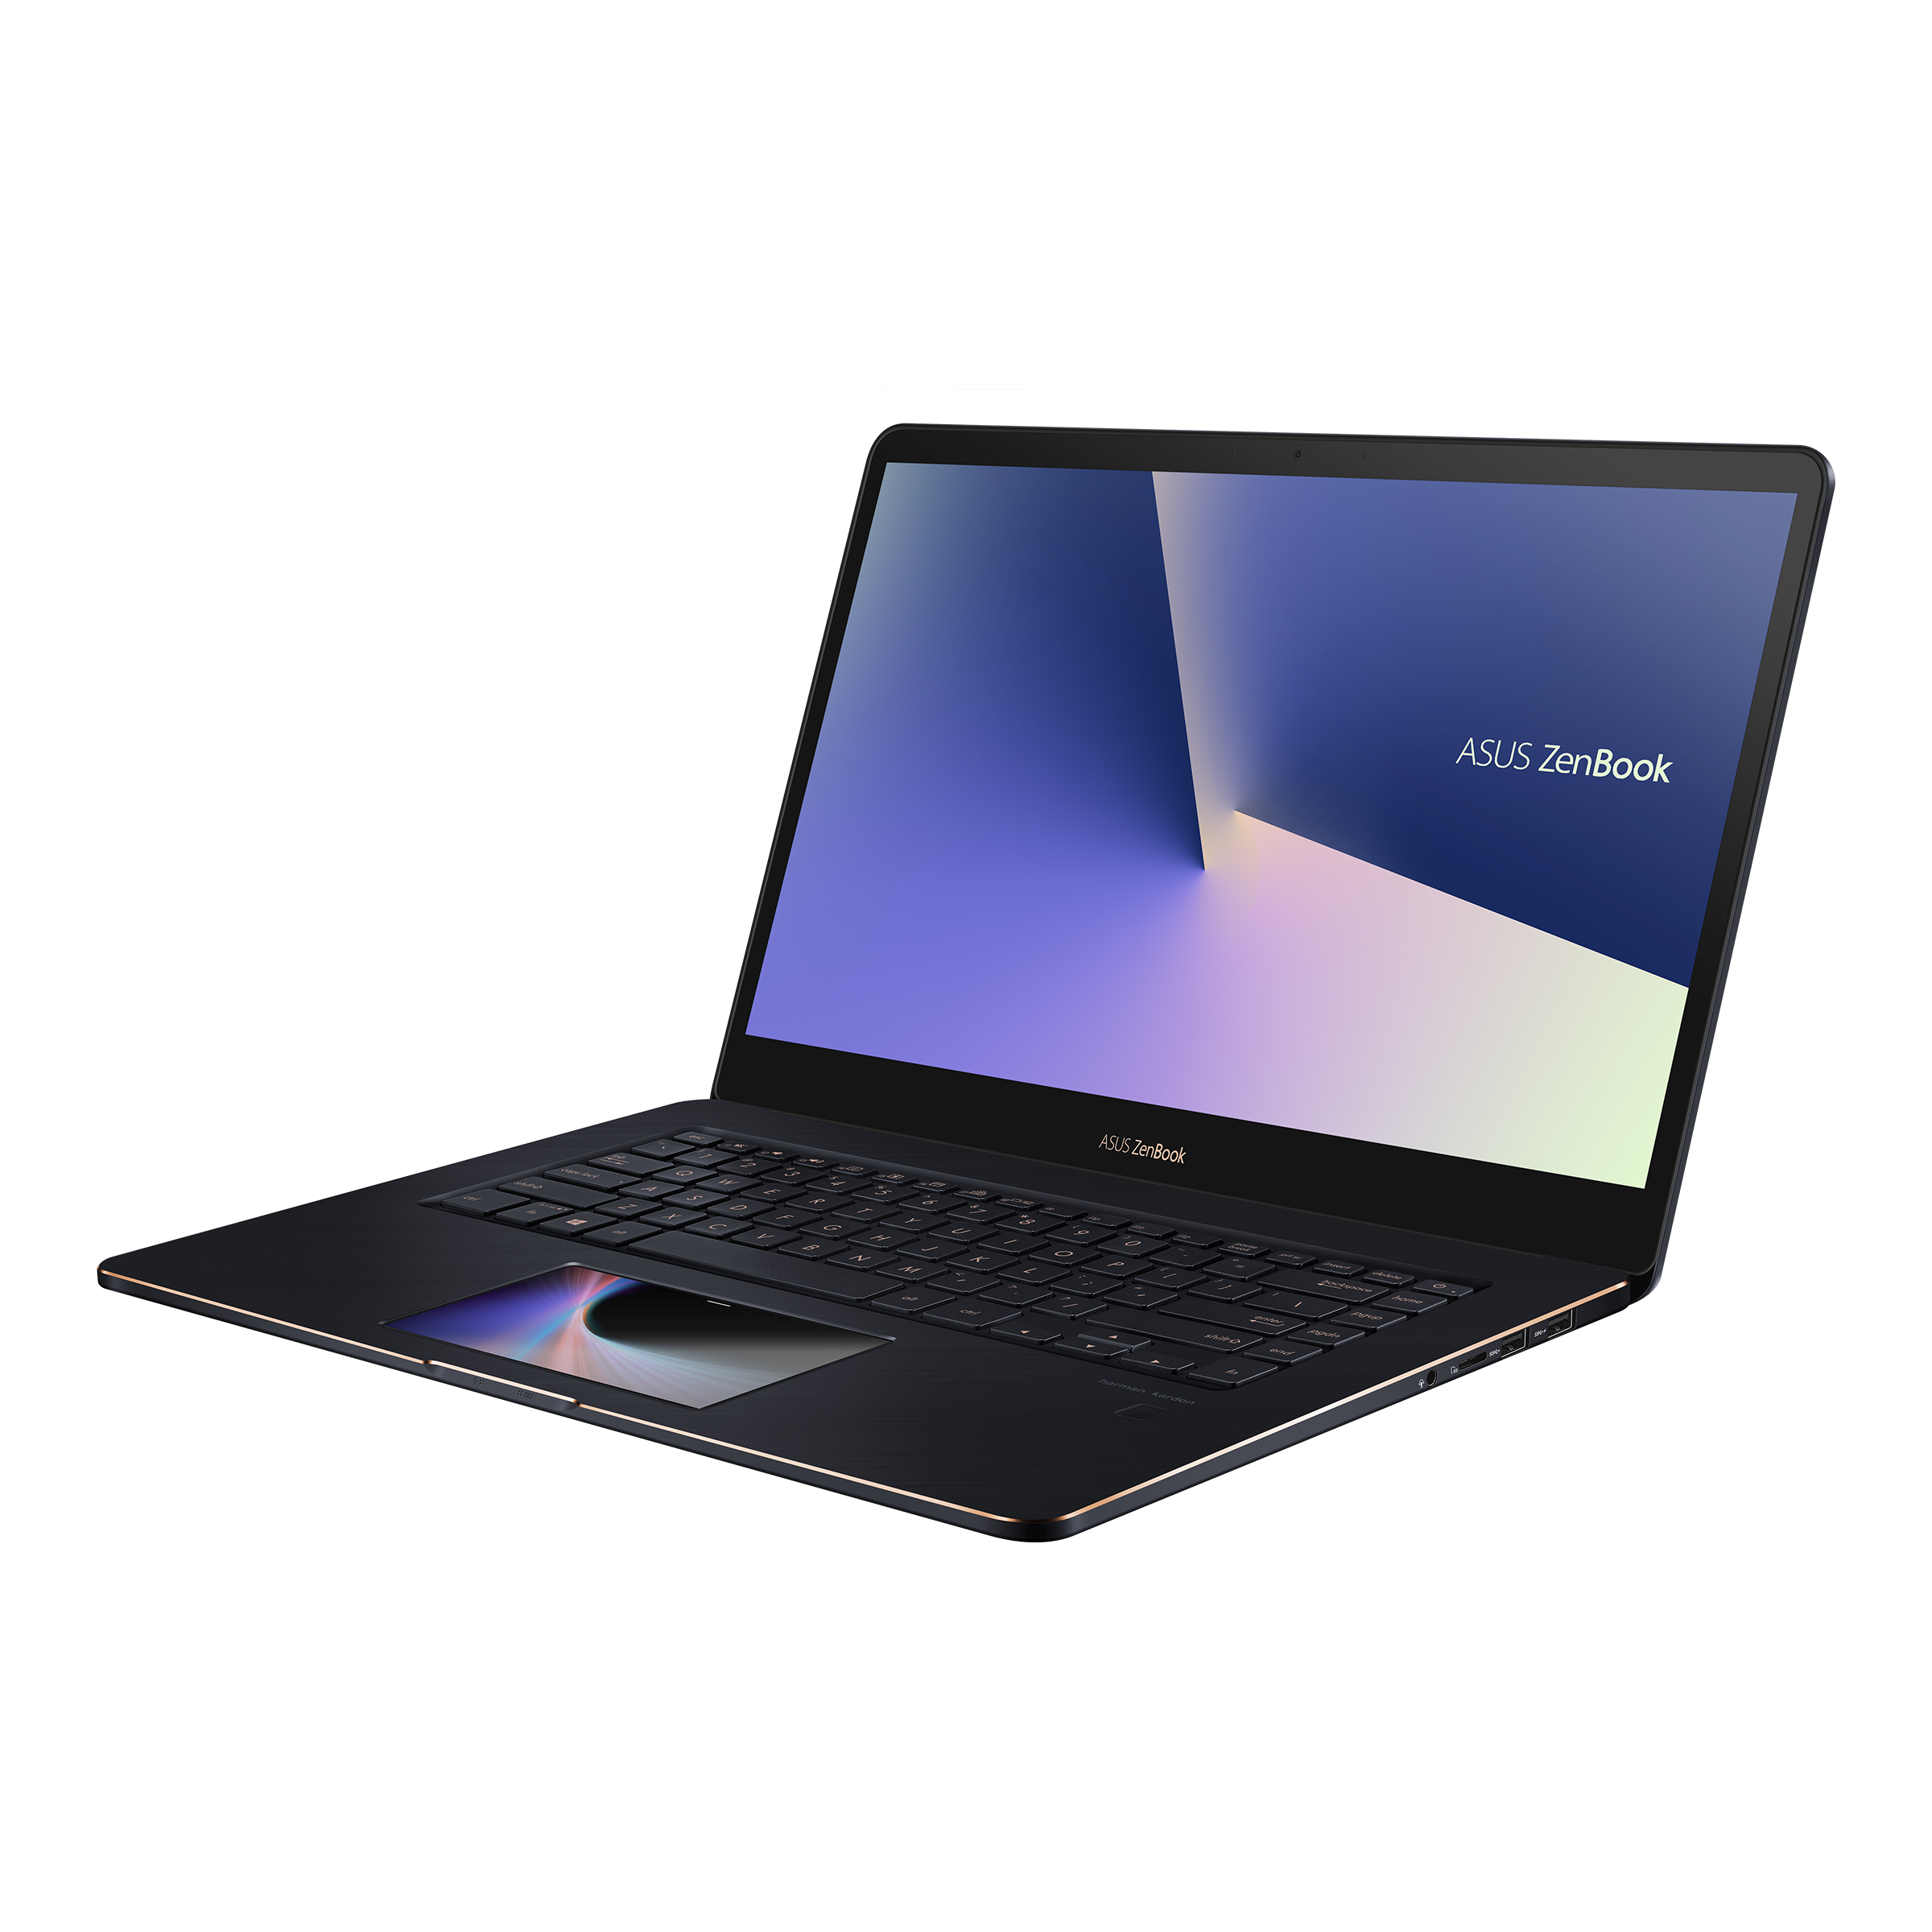 Zenbook Pro 15 UX580｜Laptops For Home｜ASUS Global